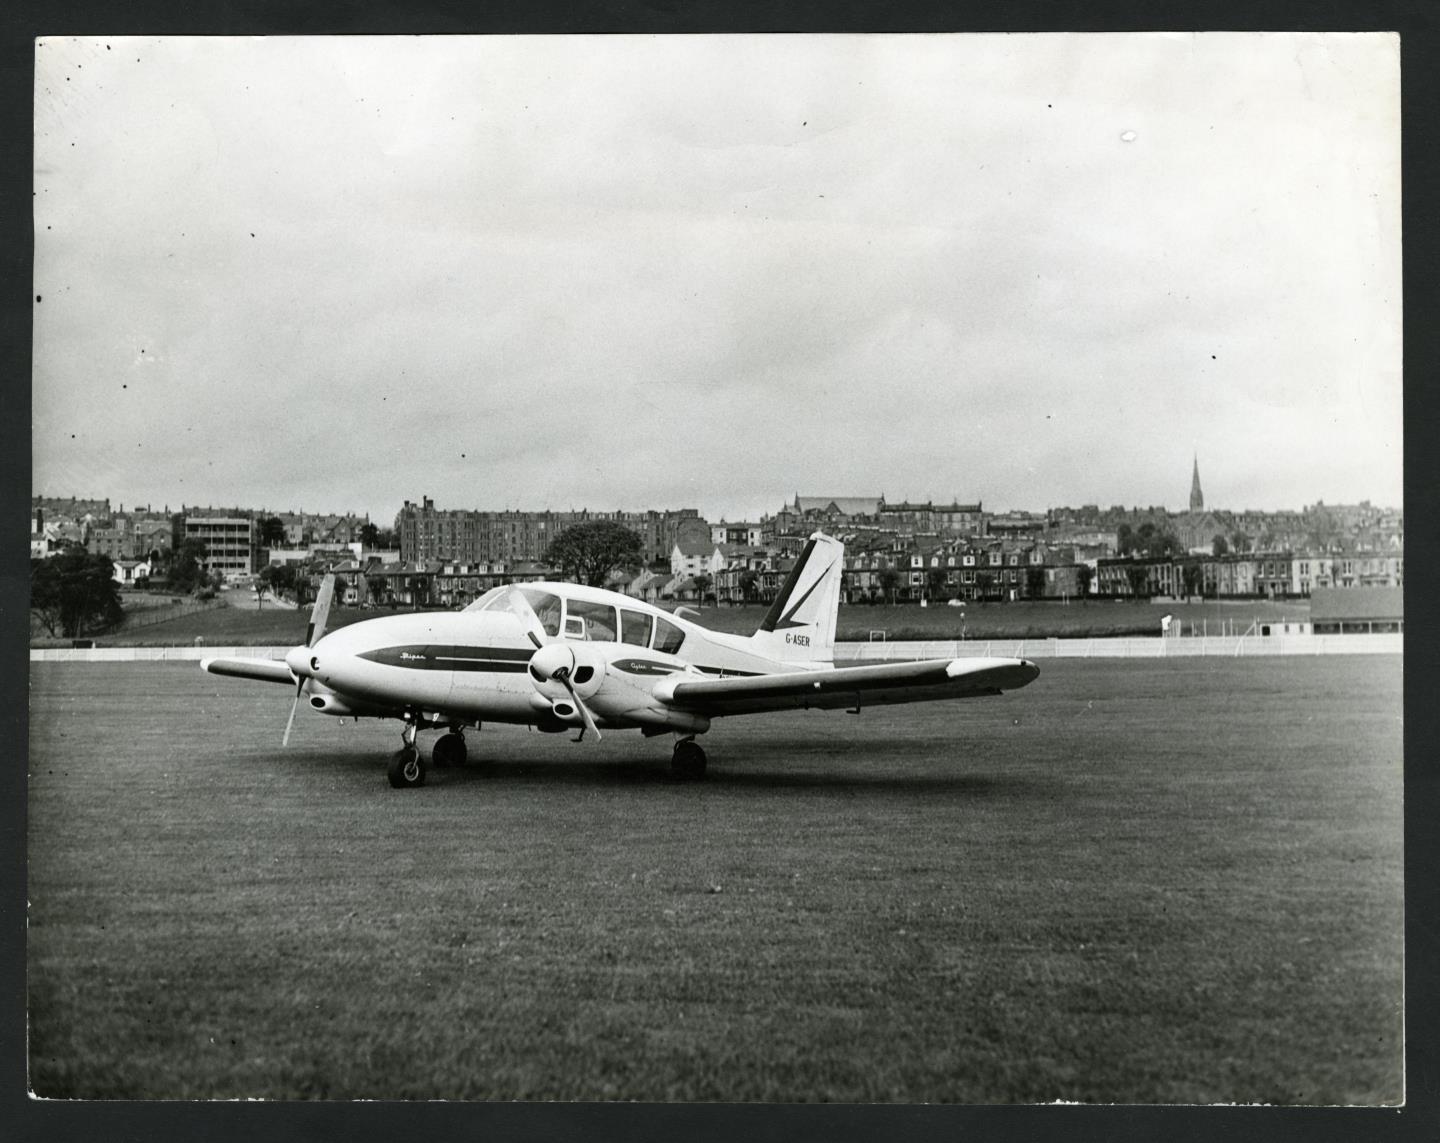 A Loganair plane landing at the Riverside airstrip, Dundee, in 1965.